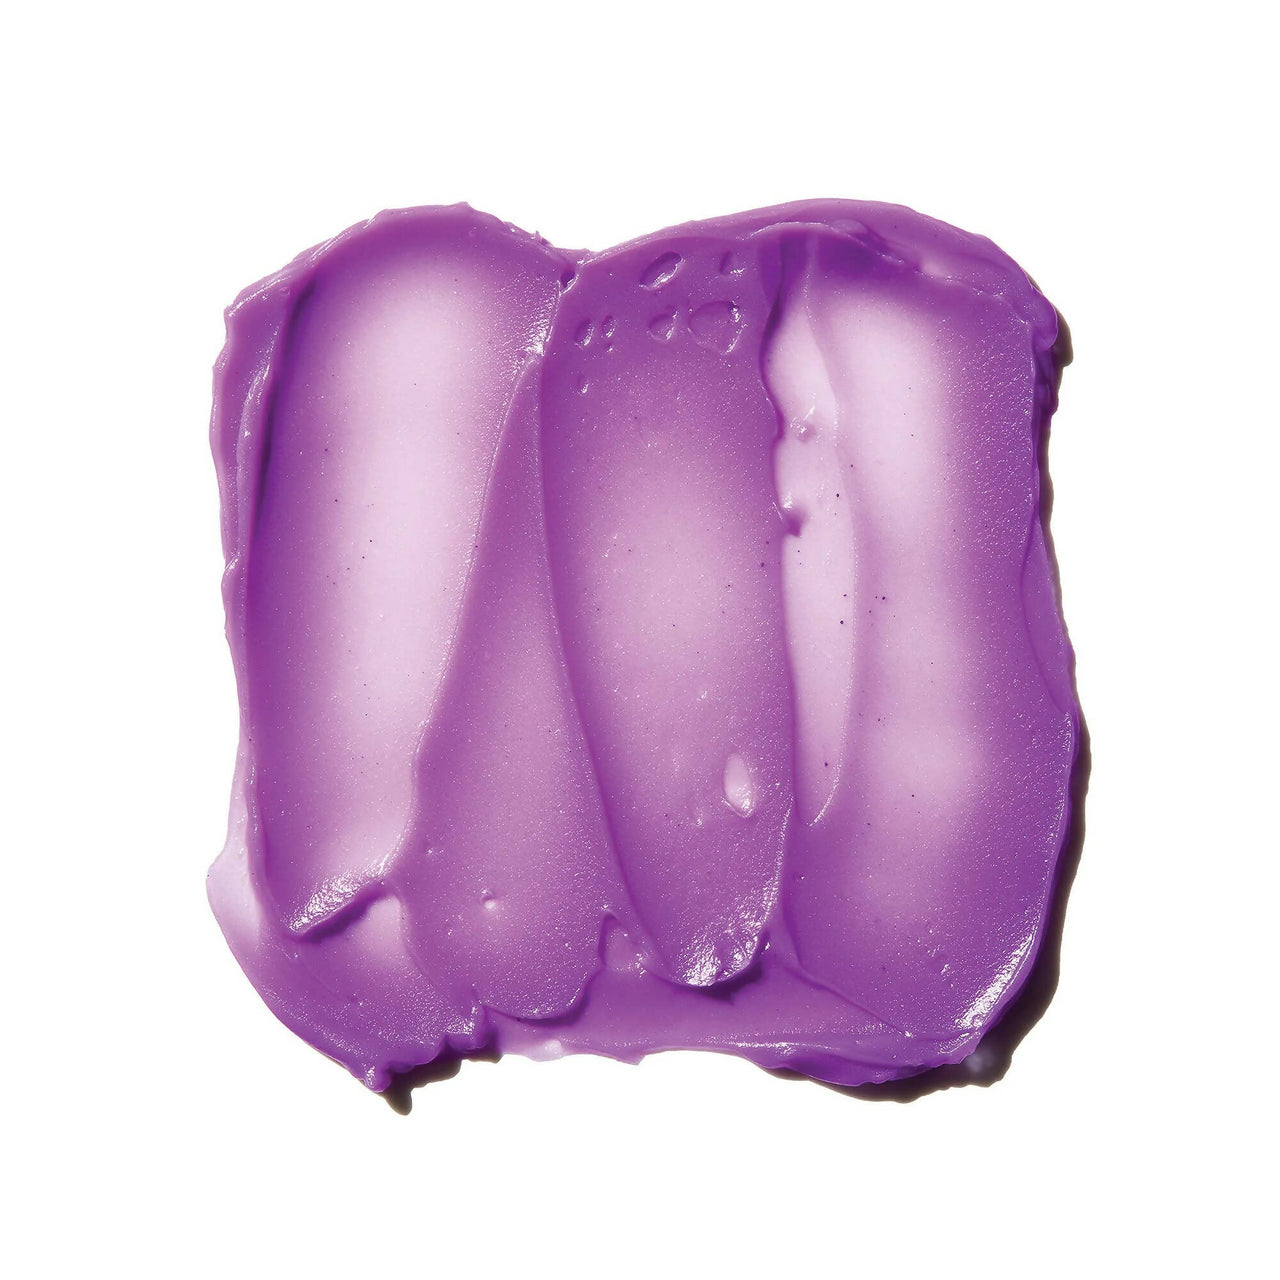 e.l.f. Cosmetics Tone Adjusting Face Primer - Brightening Lavender - Distacart